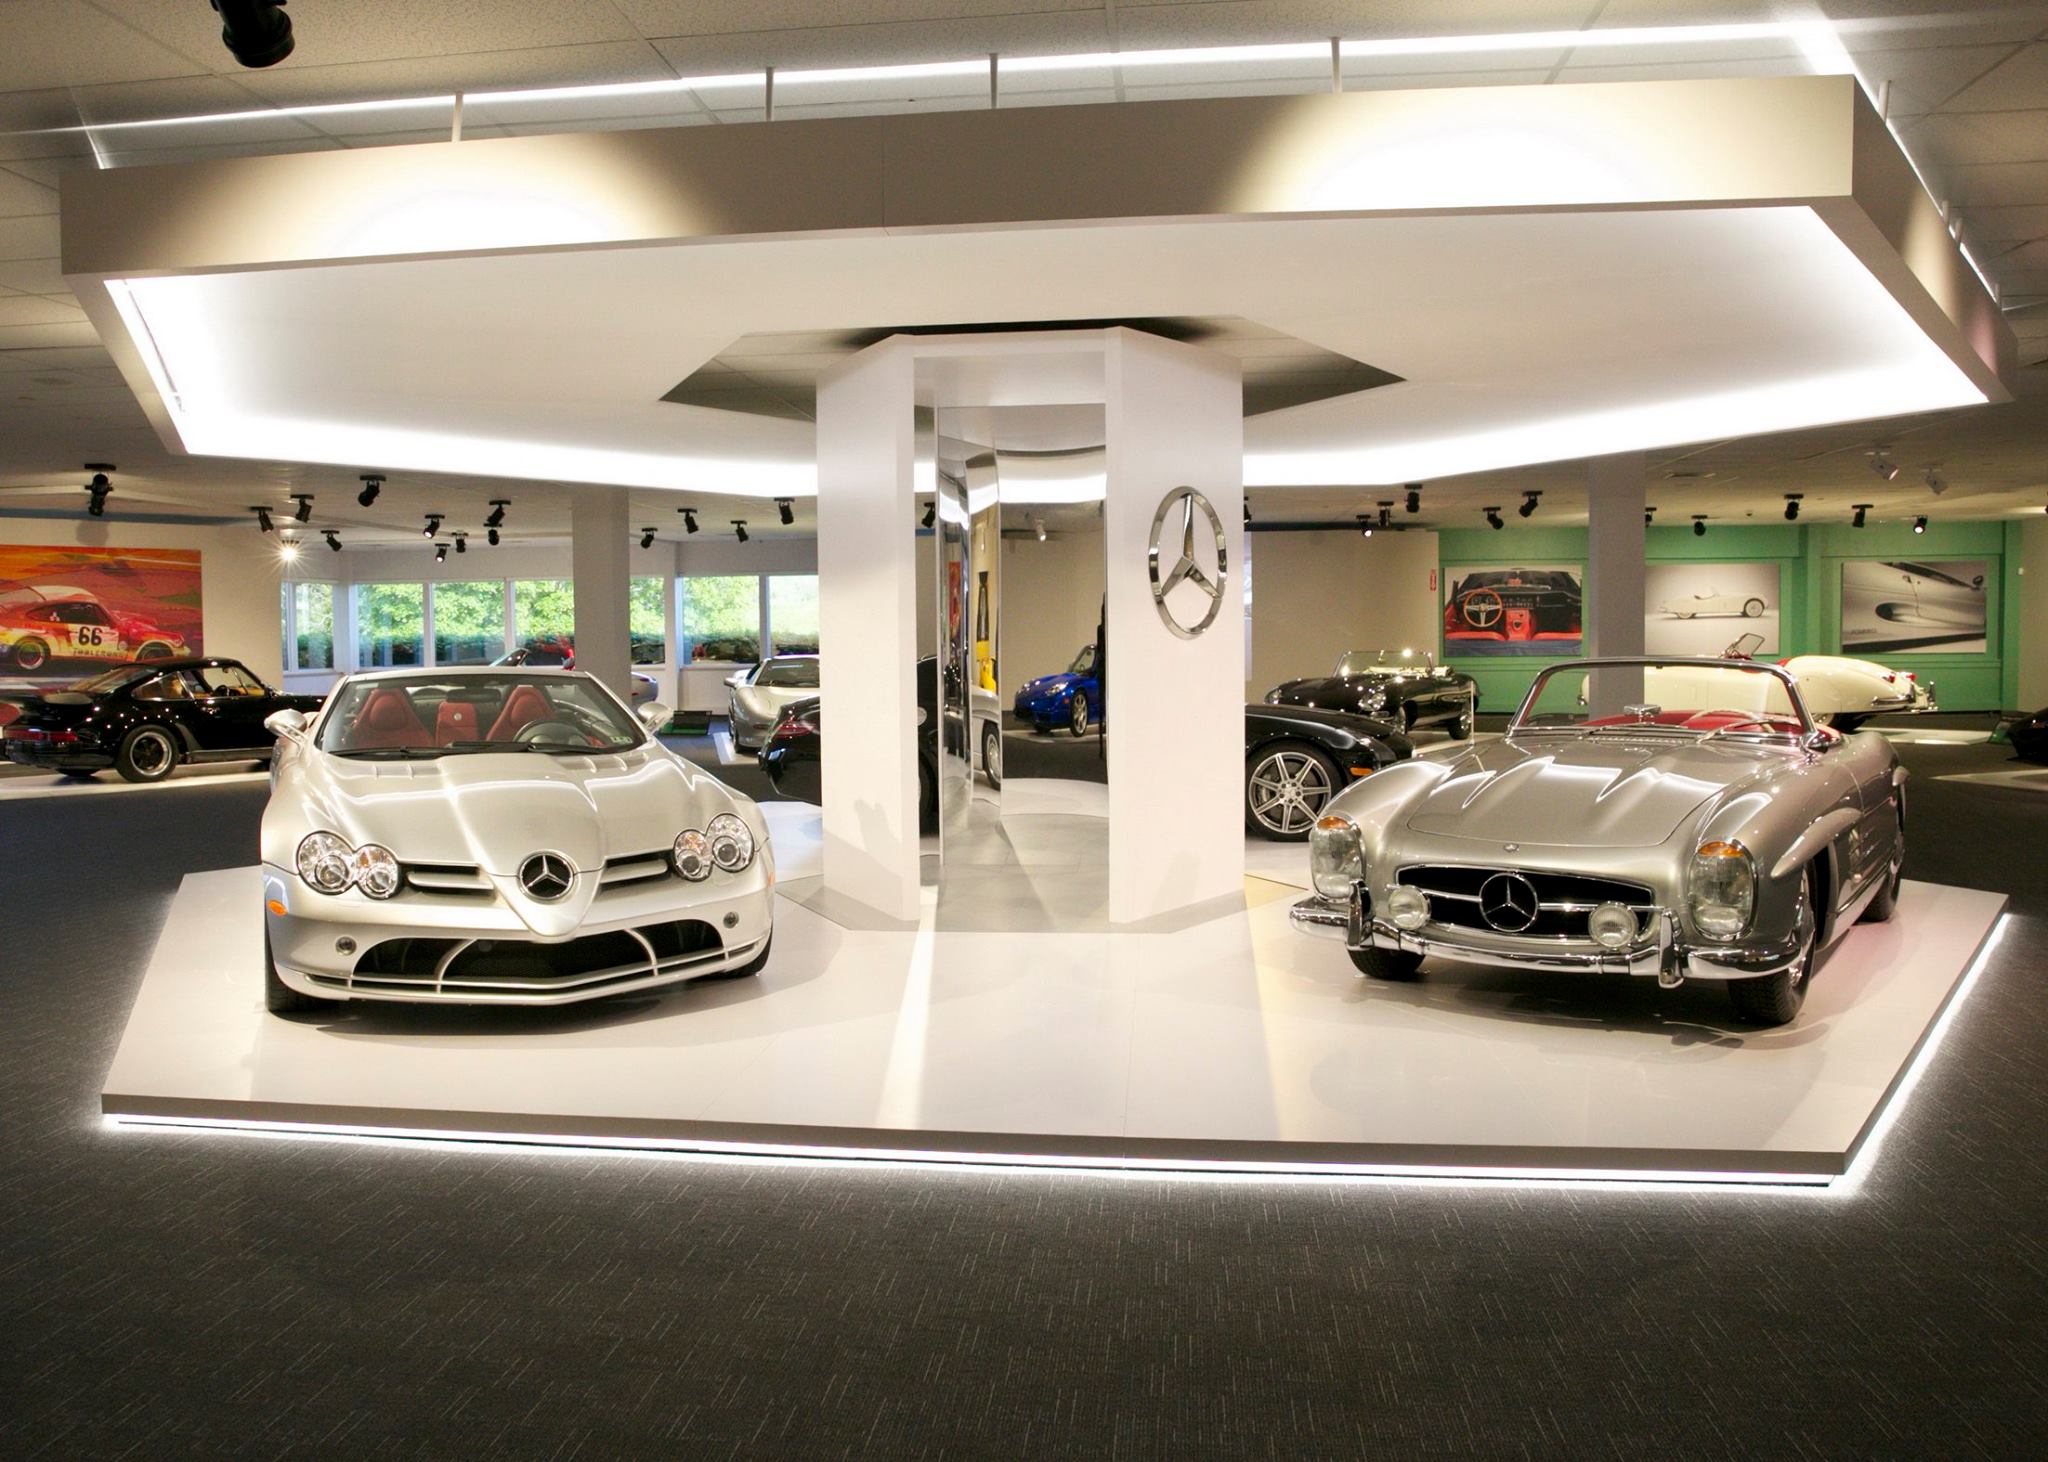 The Newport Car Museum